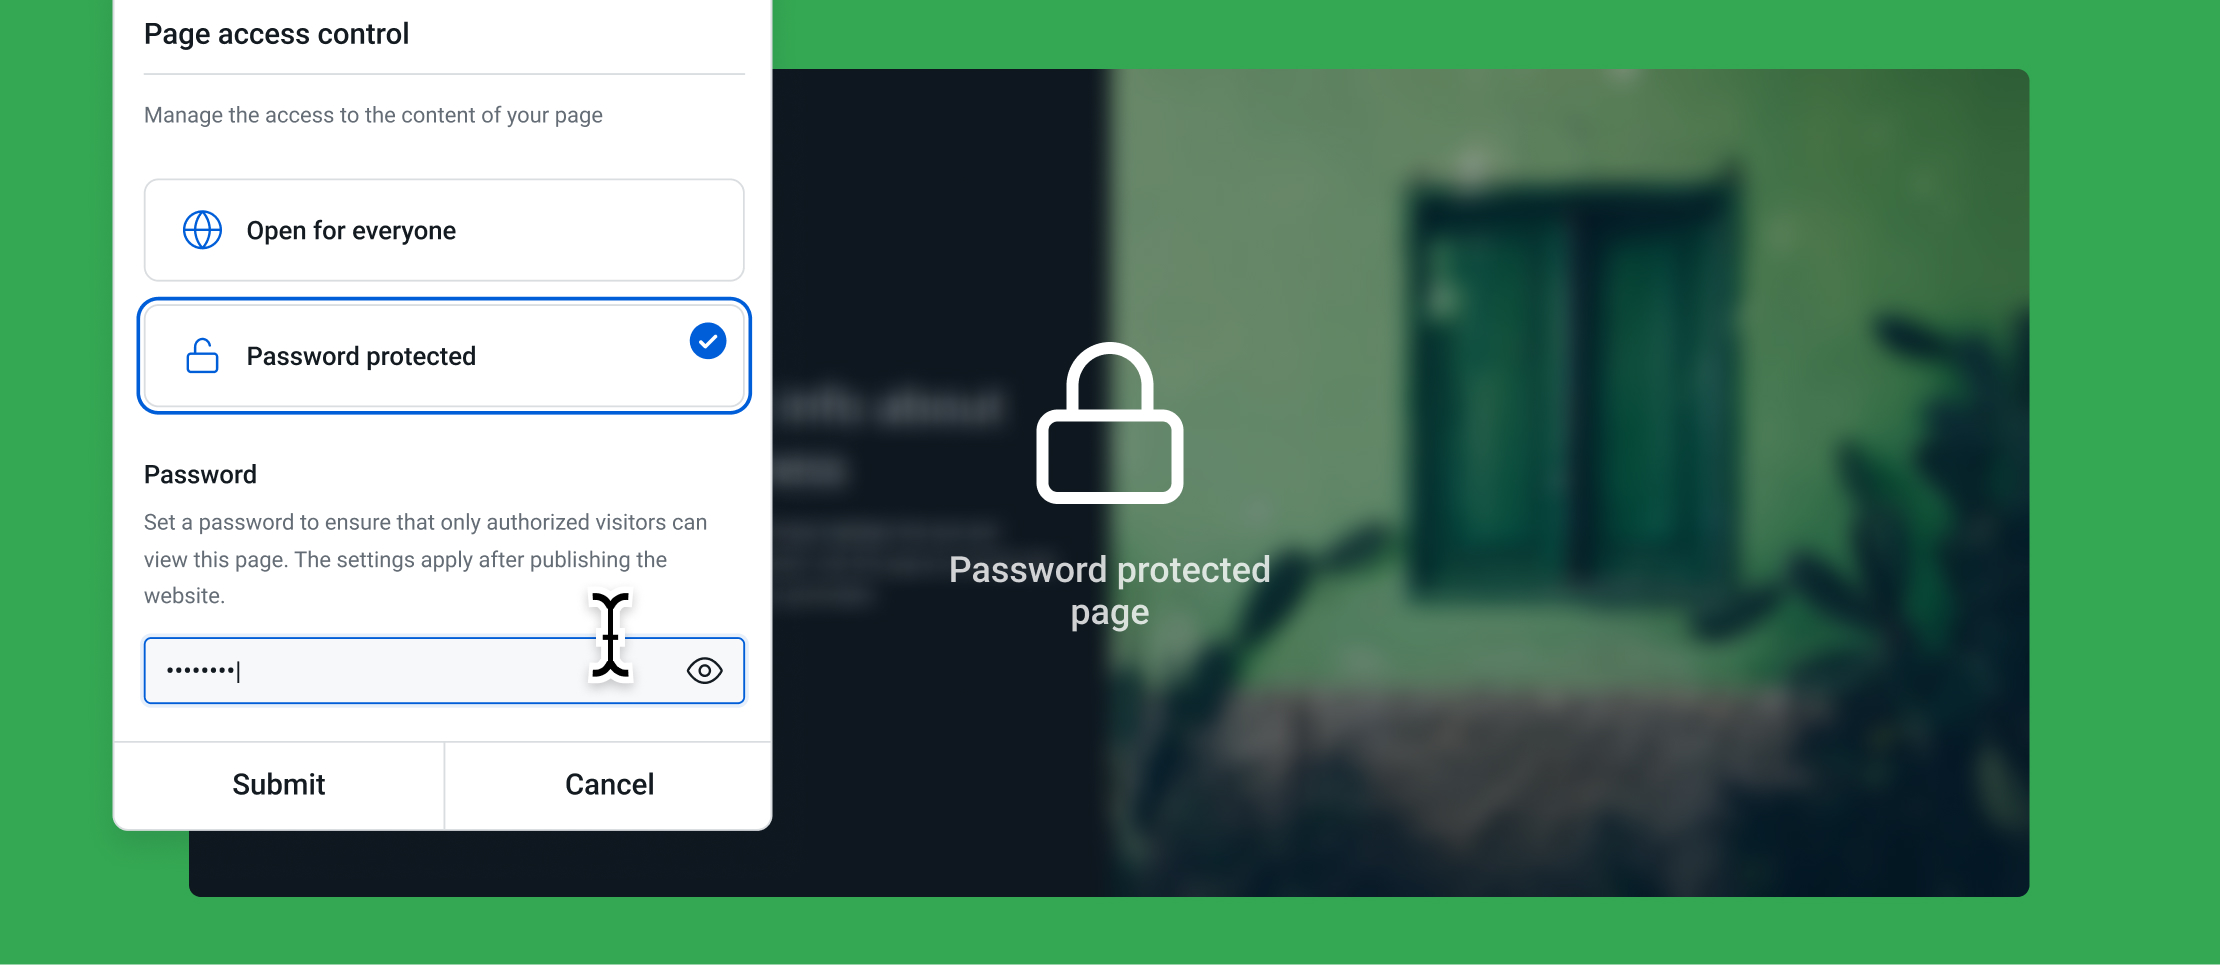 Password Protection.jpg